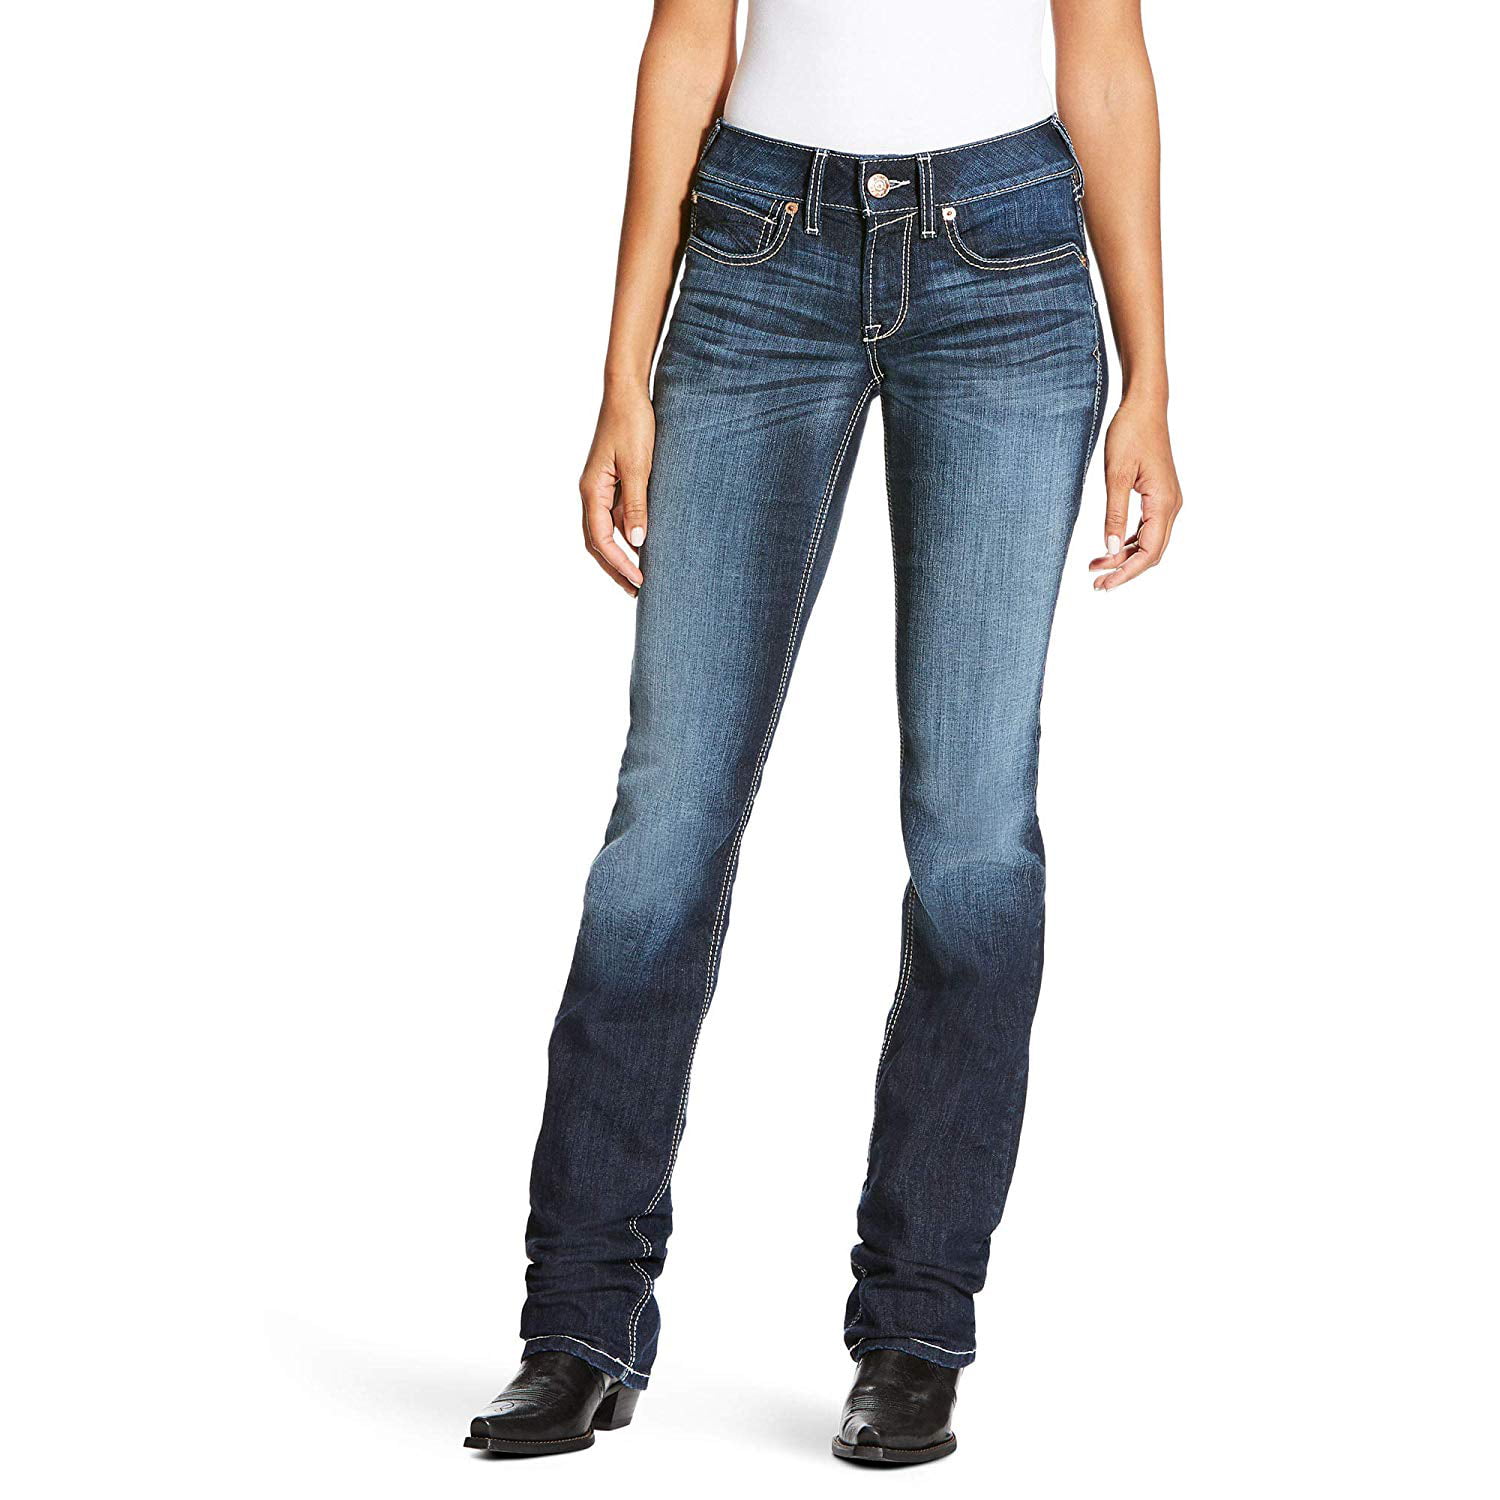 Ariat Jeans Women's Size Chart